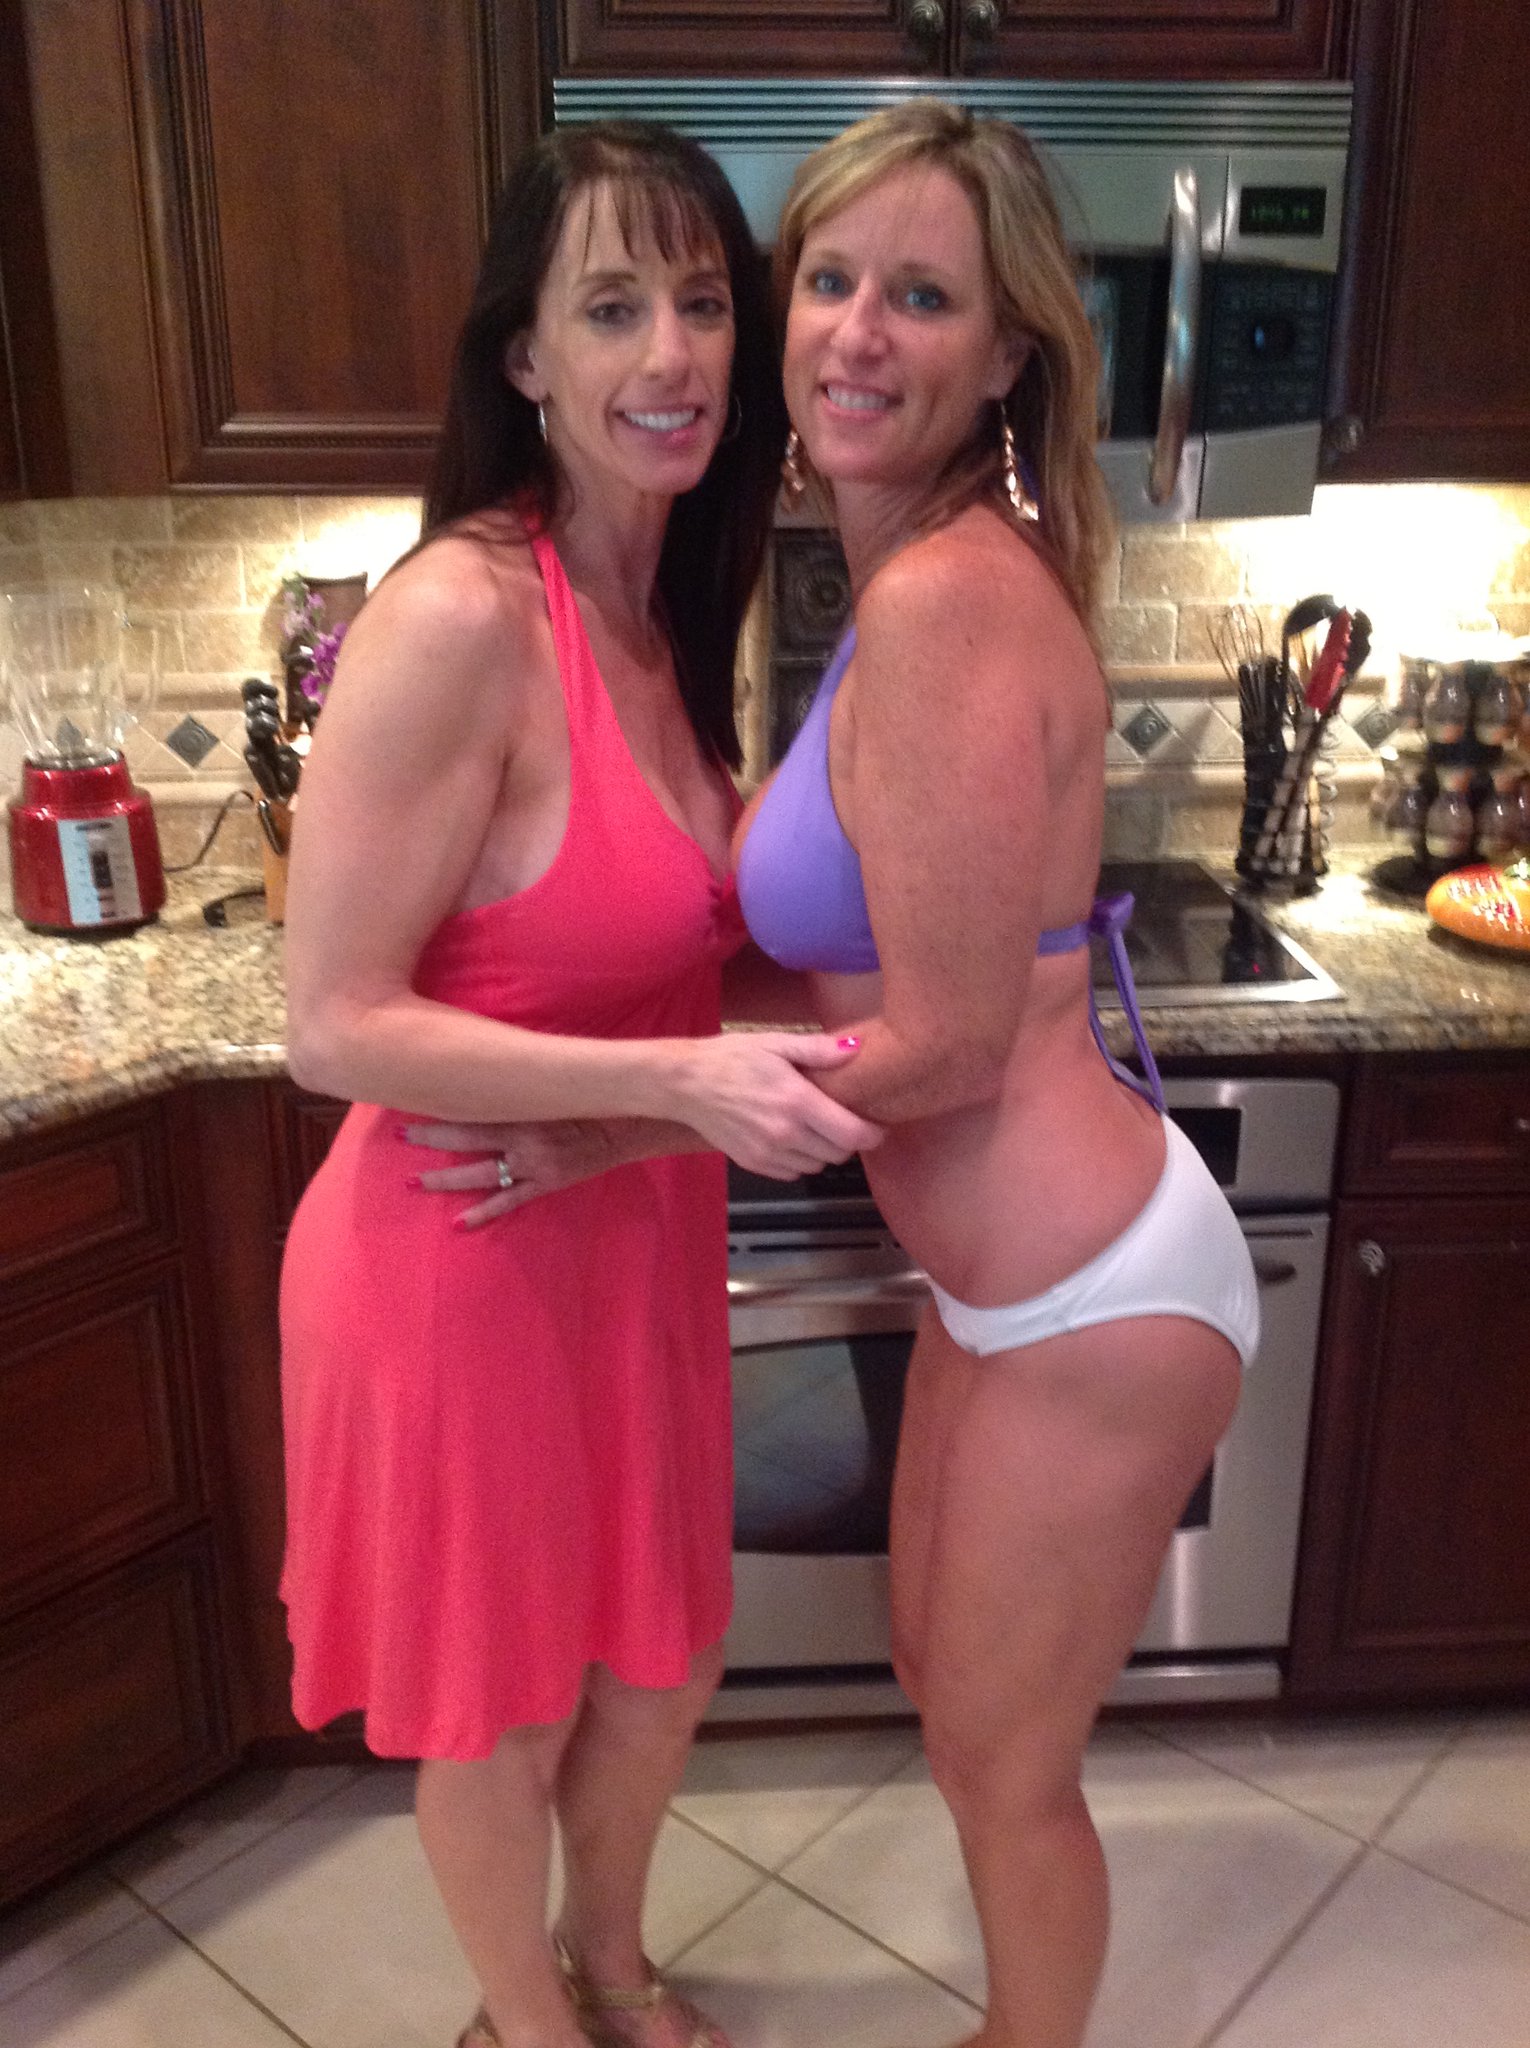 Jodi West ® on Twitter: "Cooking up some naughty fun with @BibetteBlan...